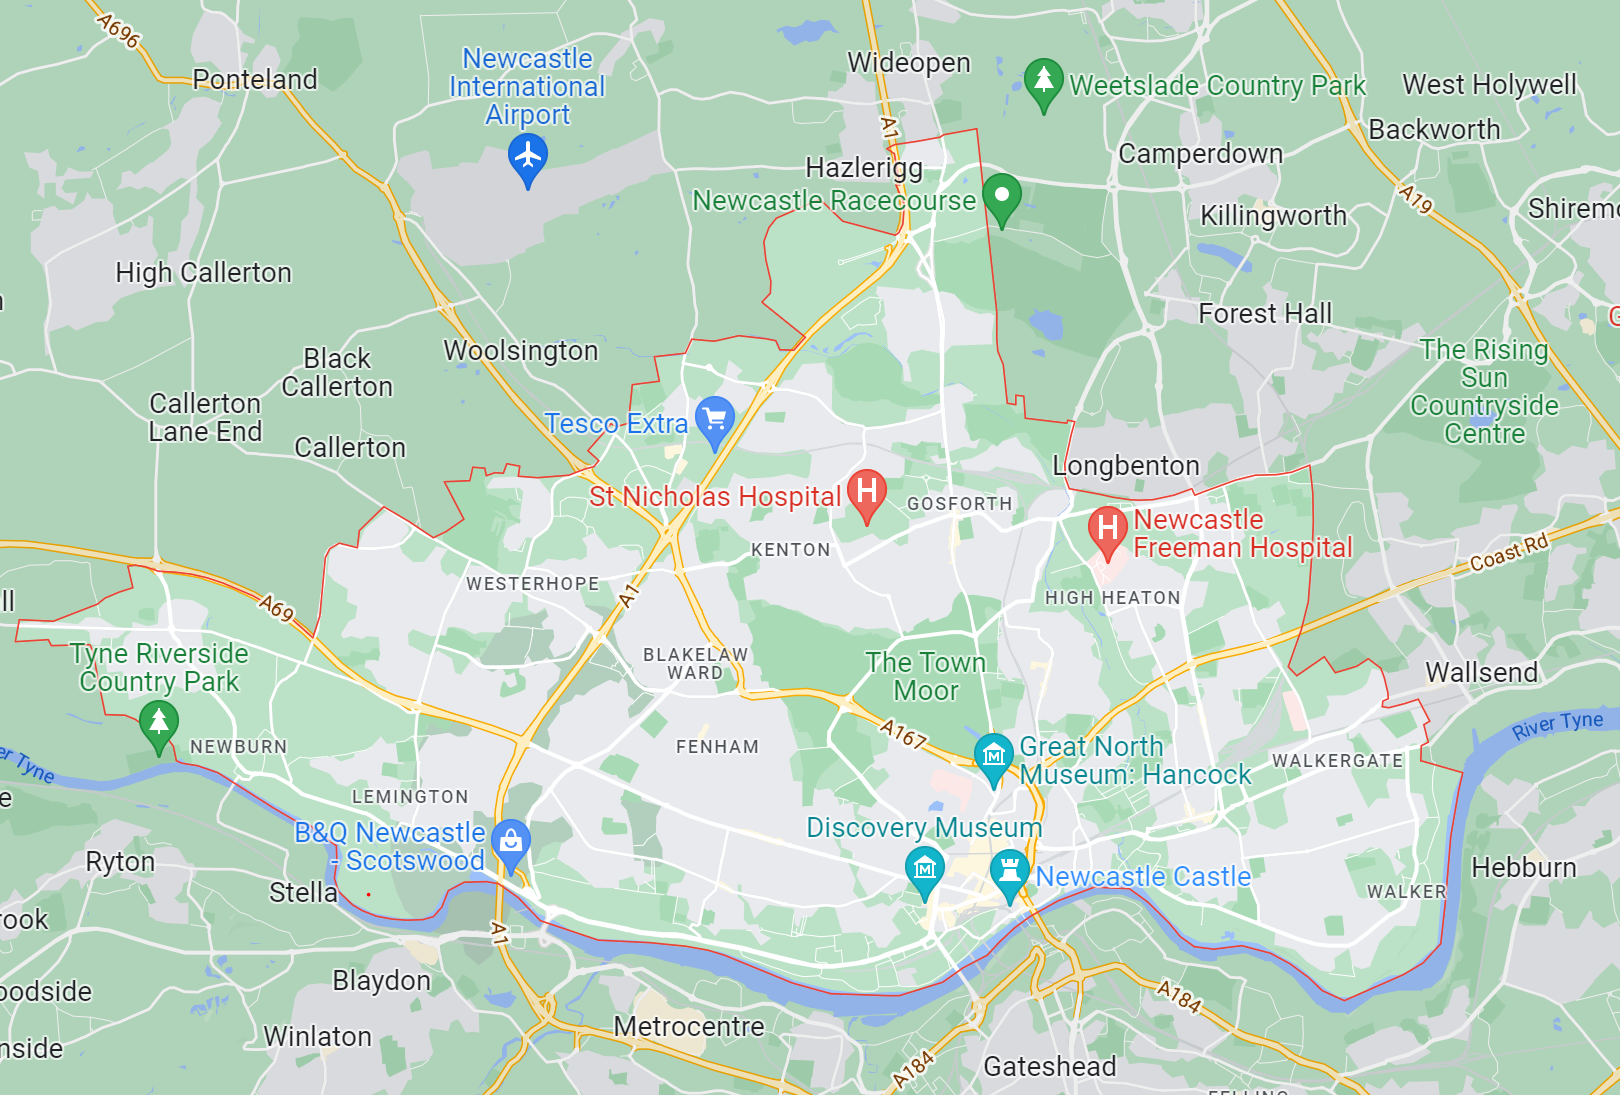 Map of Healthwatch Newcastle area